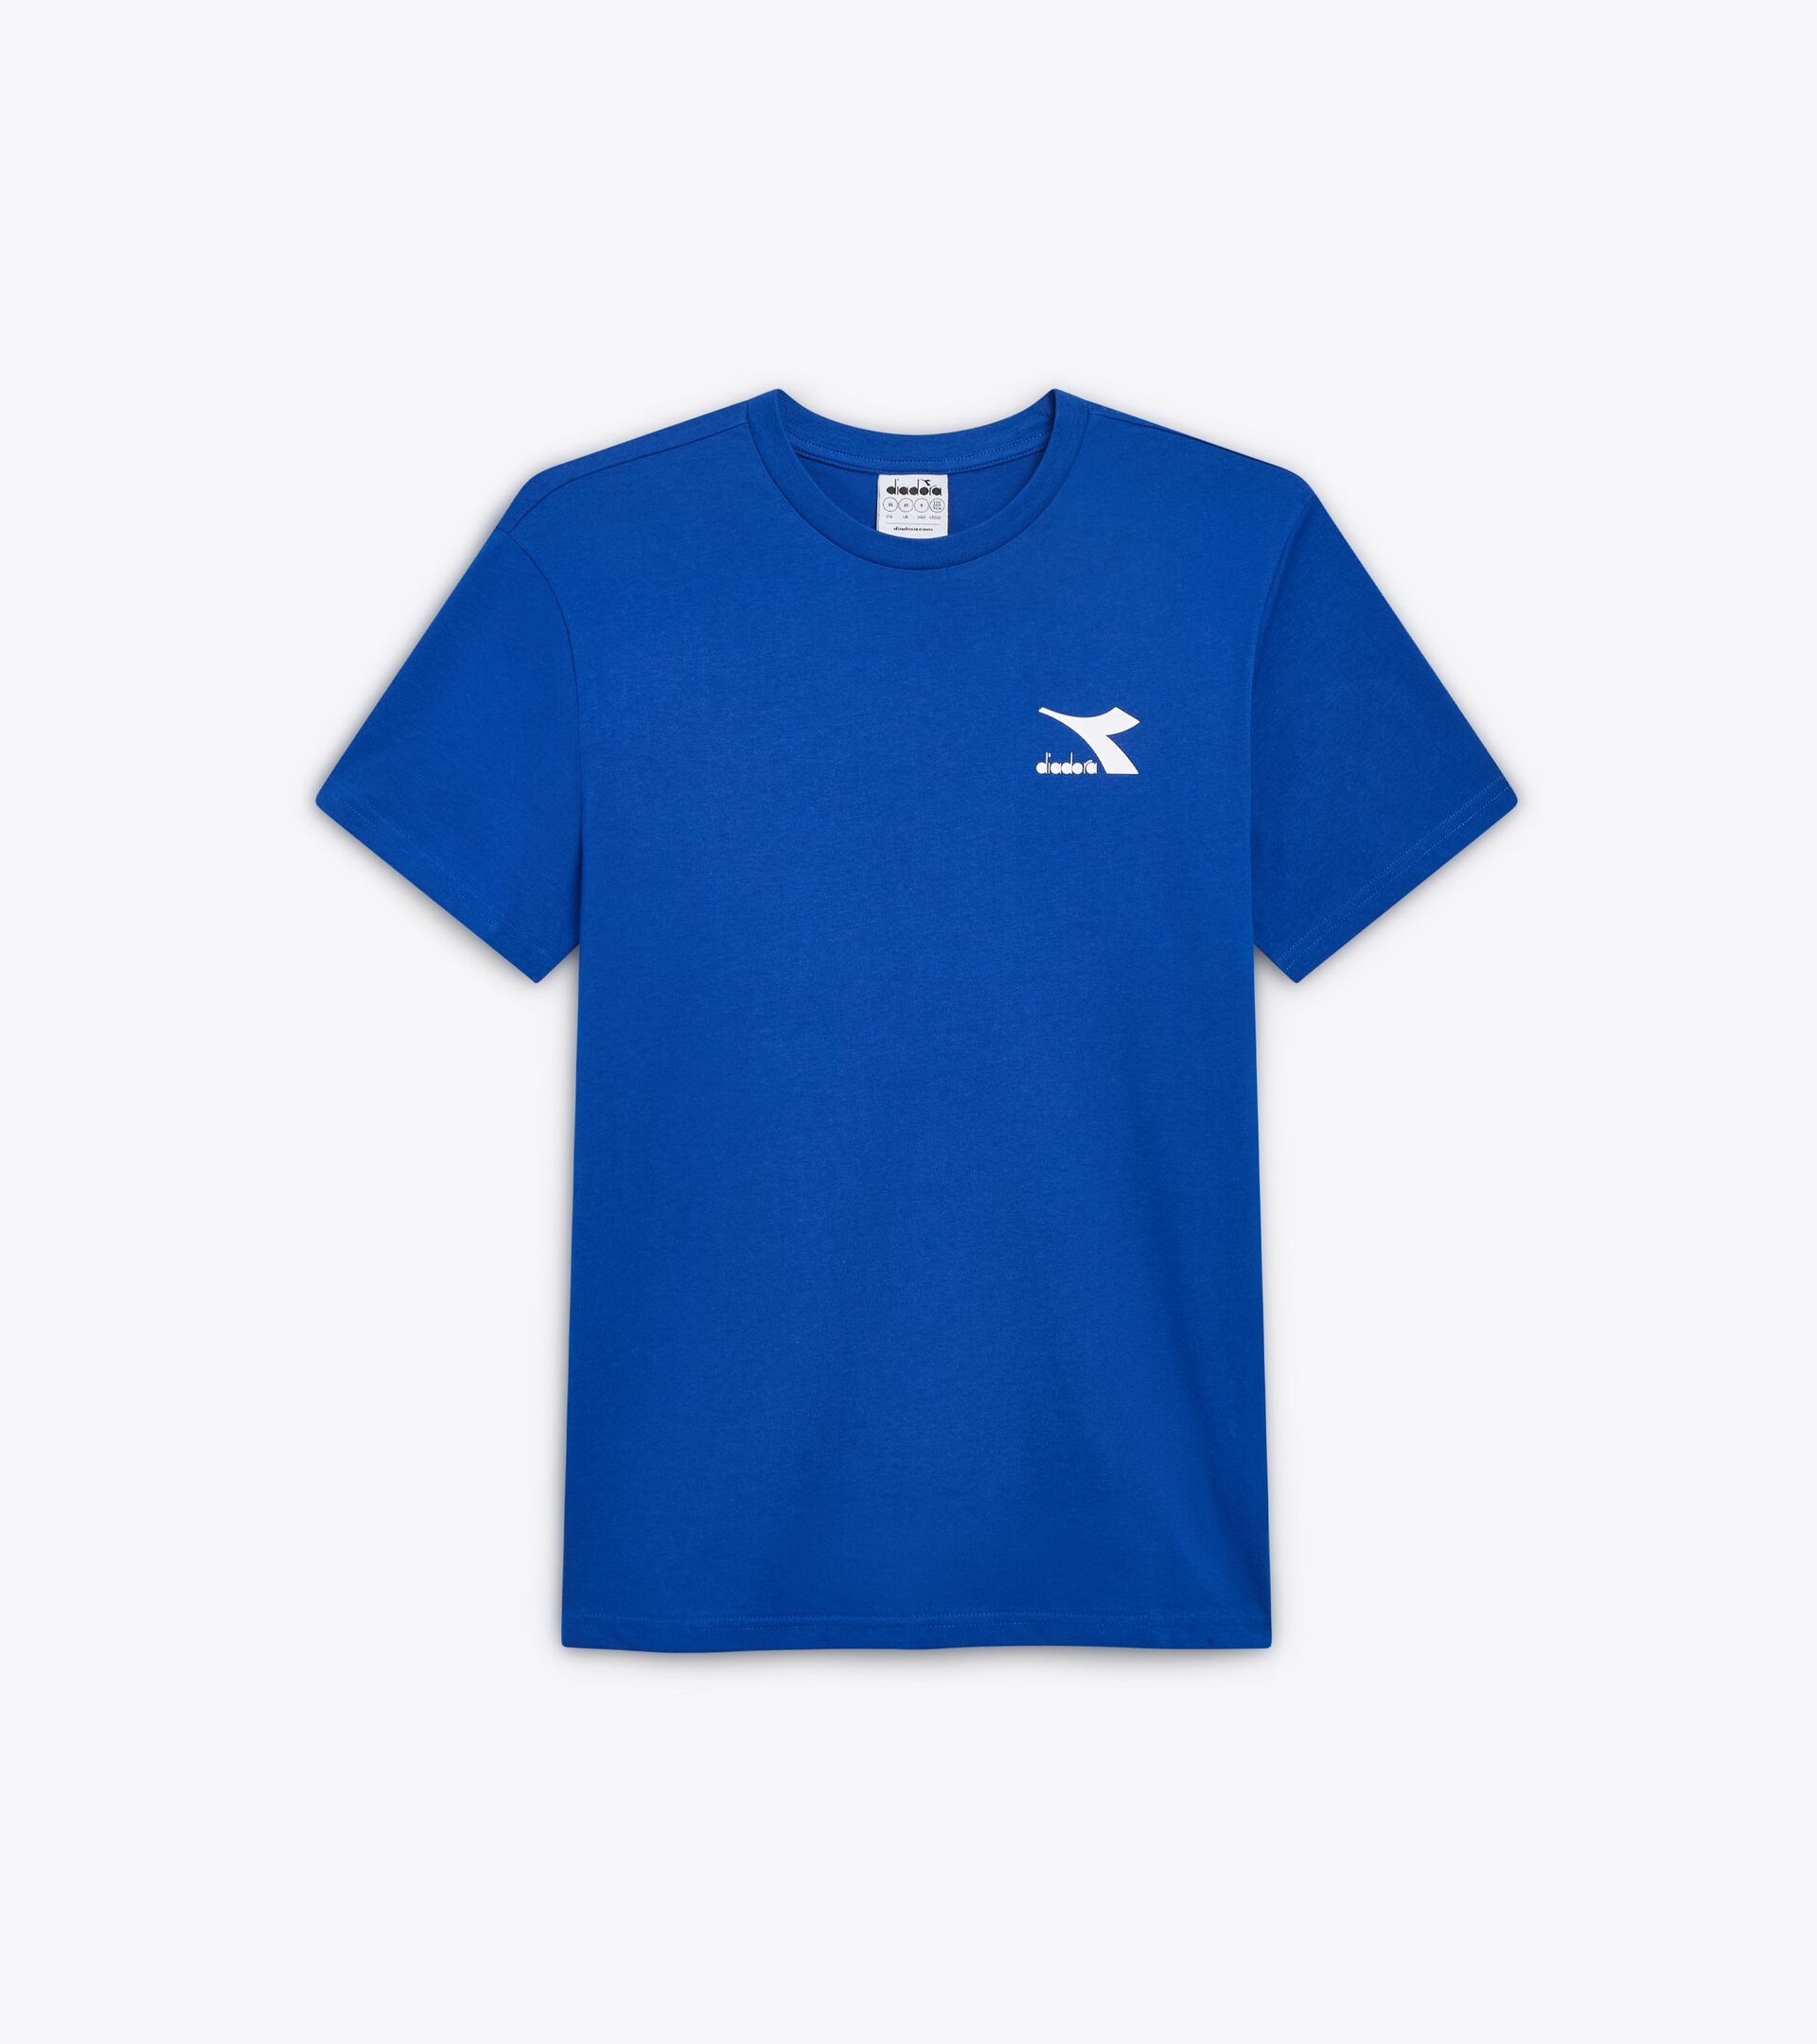 Camiseta deportiva - Hombre T-SHIRT SS CORE AZUL ULTRAMAR - Diadora